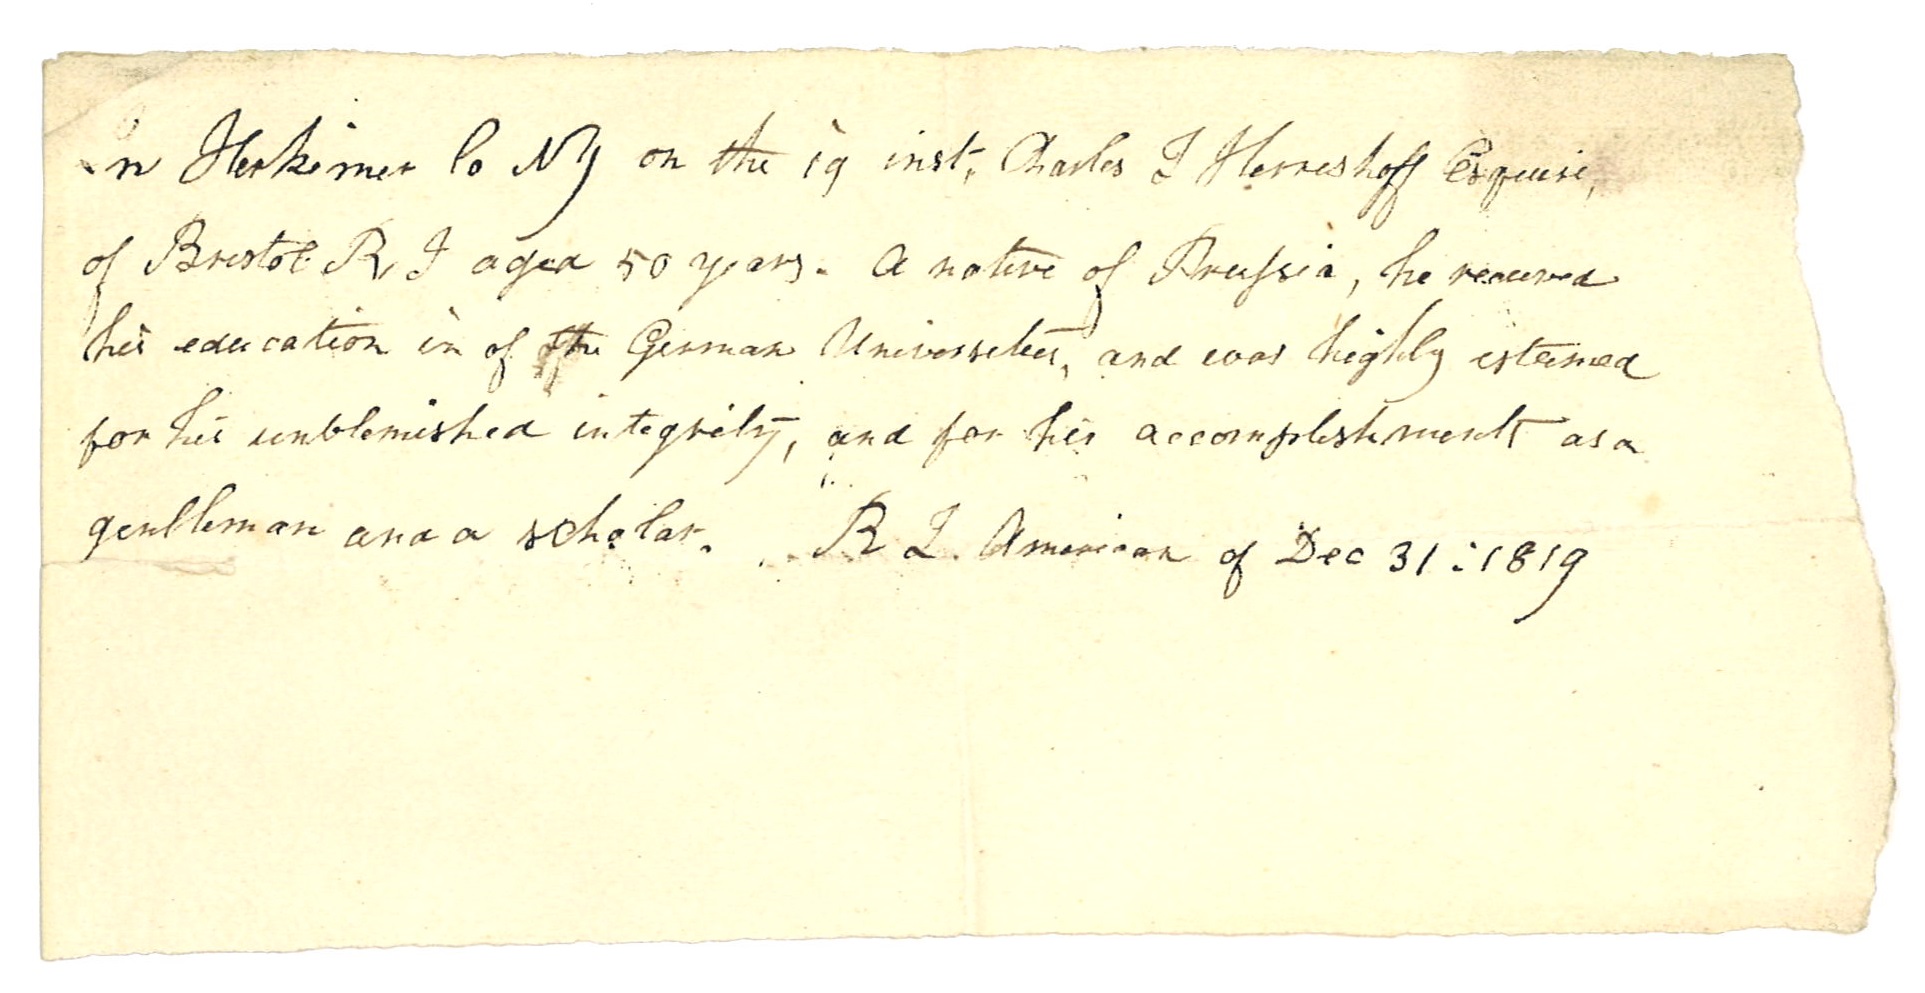 MSS 487 Subgroup 1 Series 2: Transcription of Obituary, Dec. 31, 1819